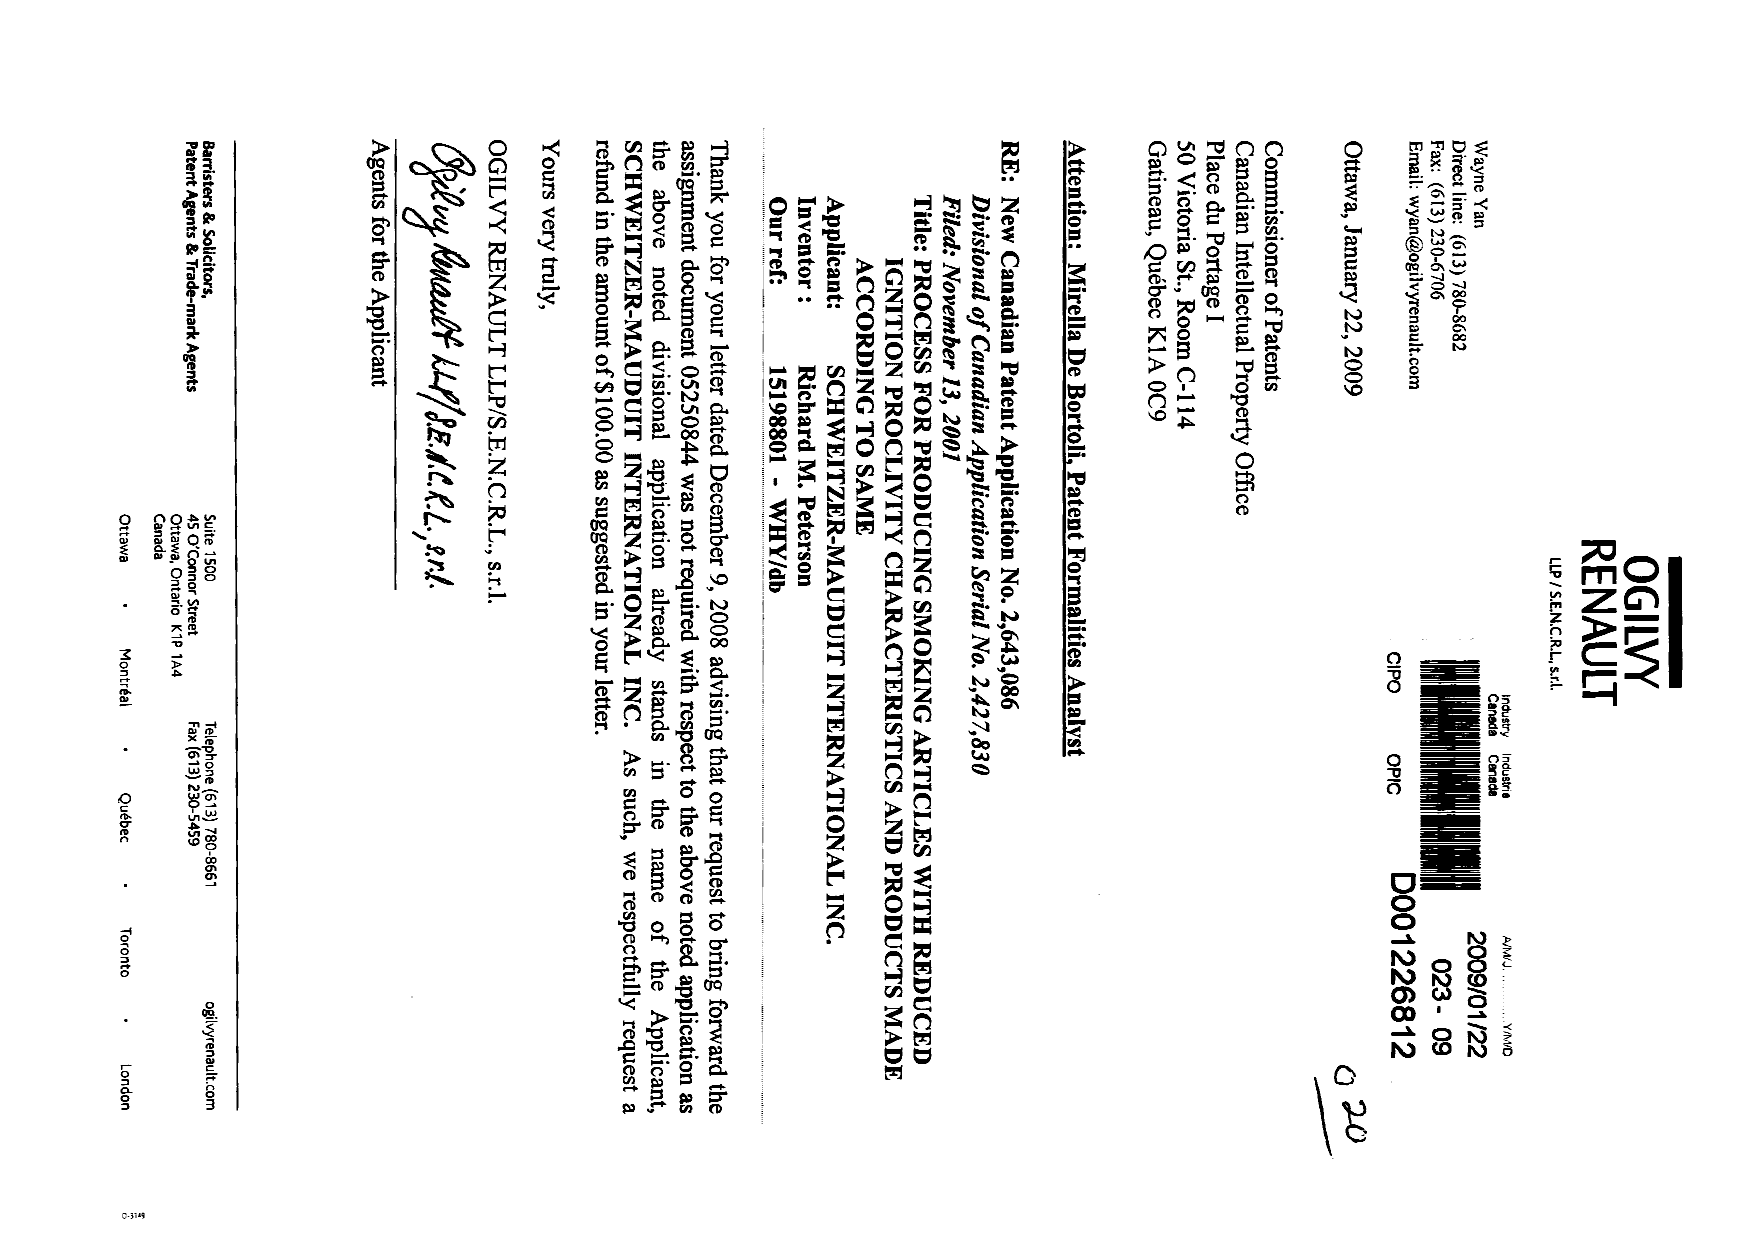 Canadian Patent Document 2643086. Correspondence 20081222. Image 1 of 3